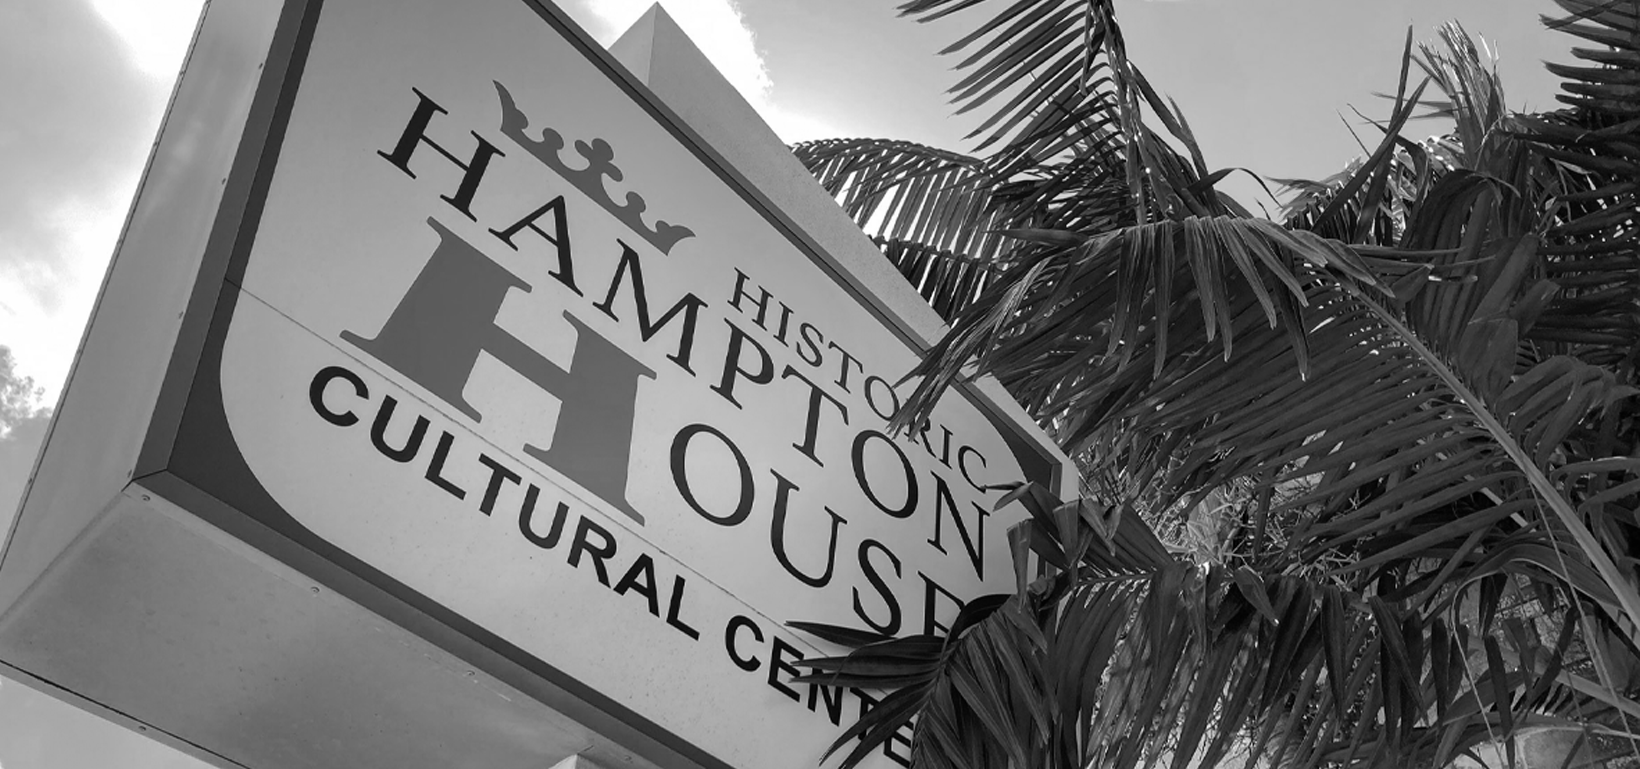 Historic Hampton House Museum of Culture & Art